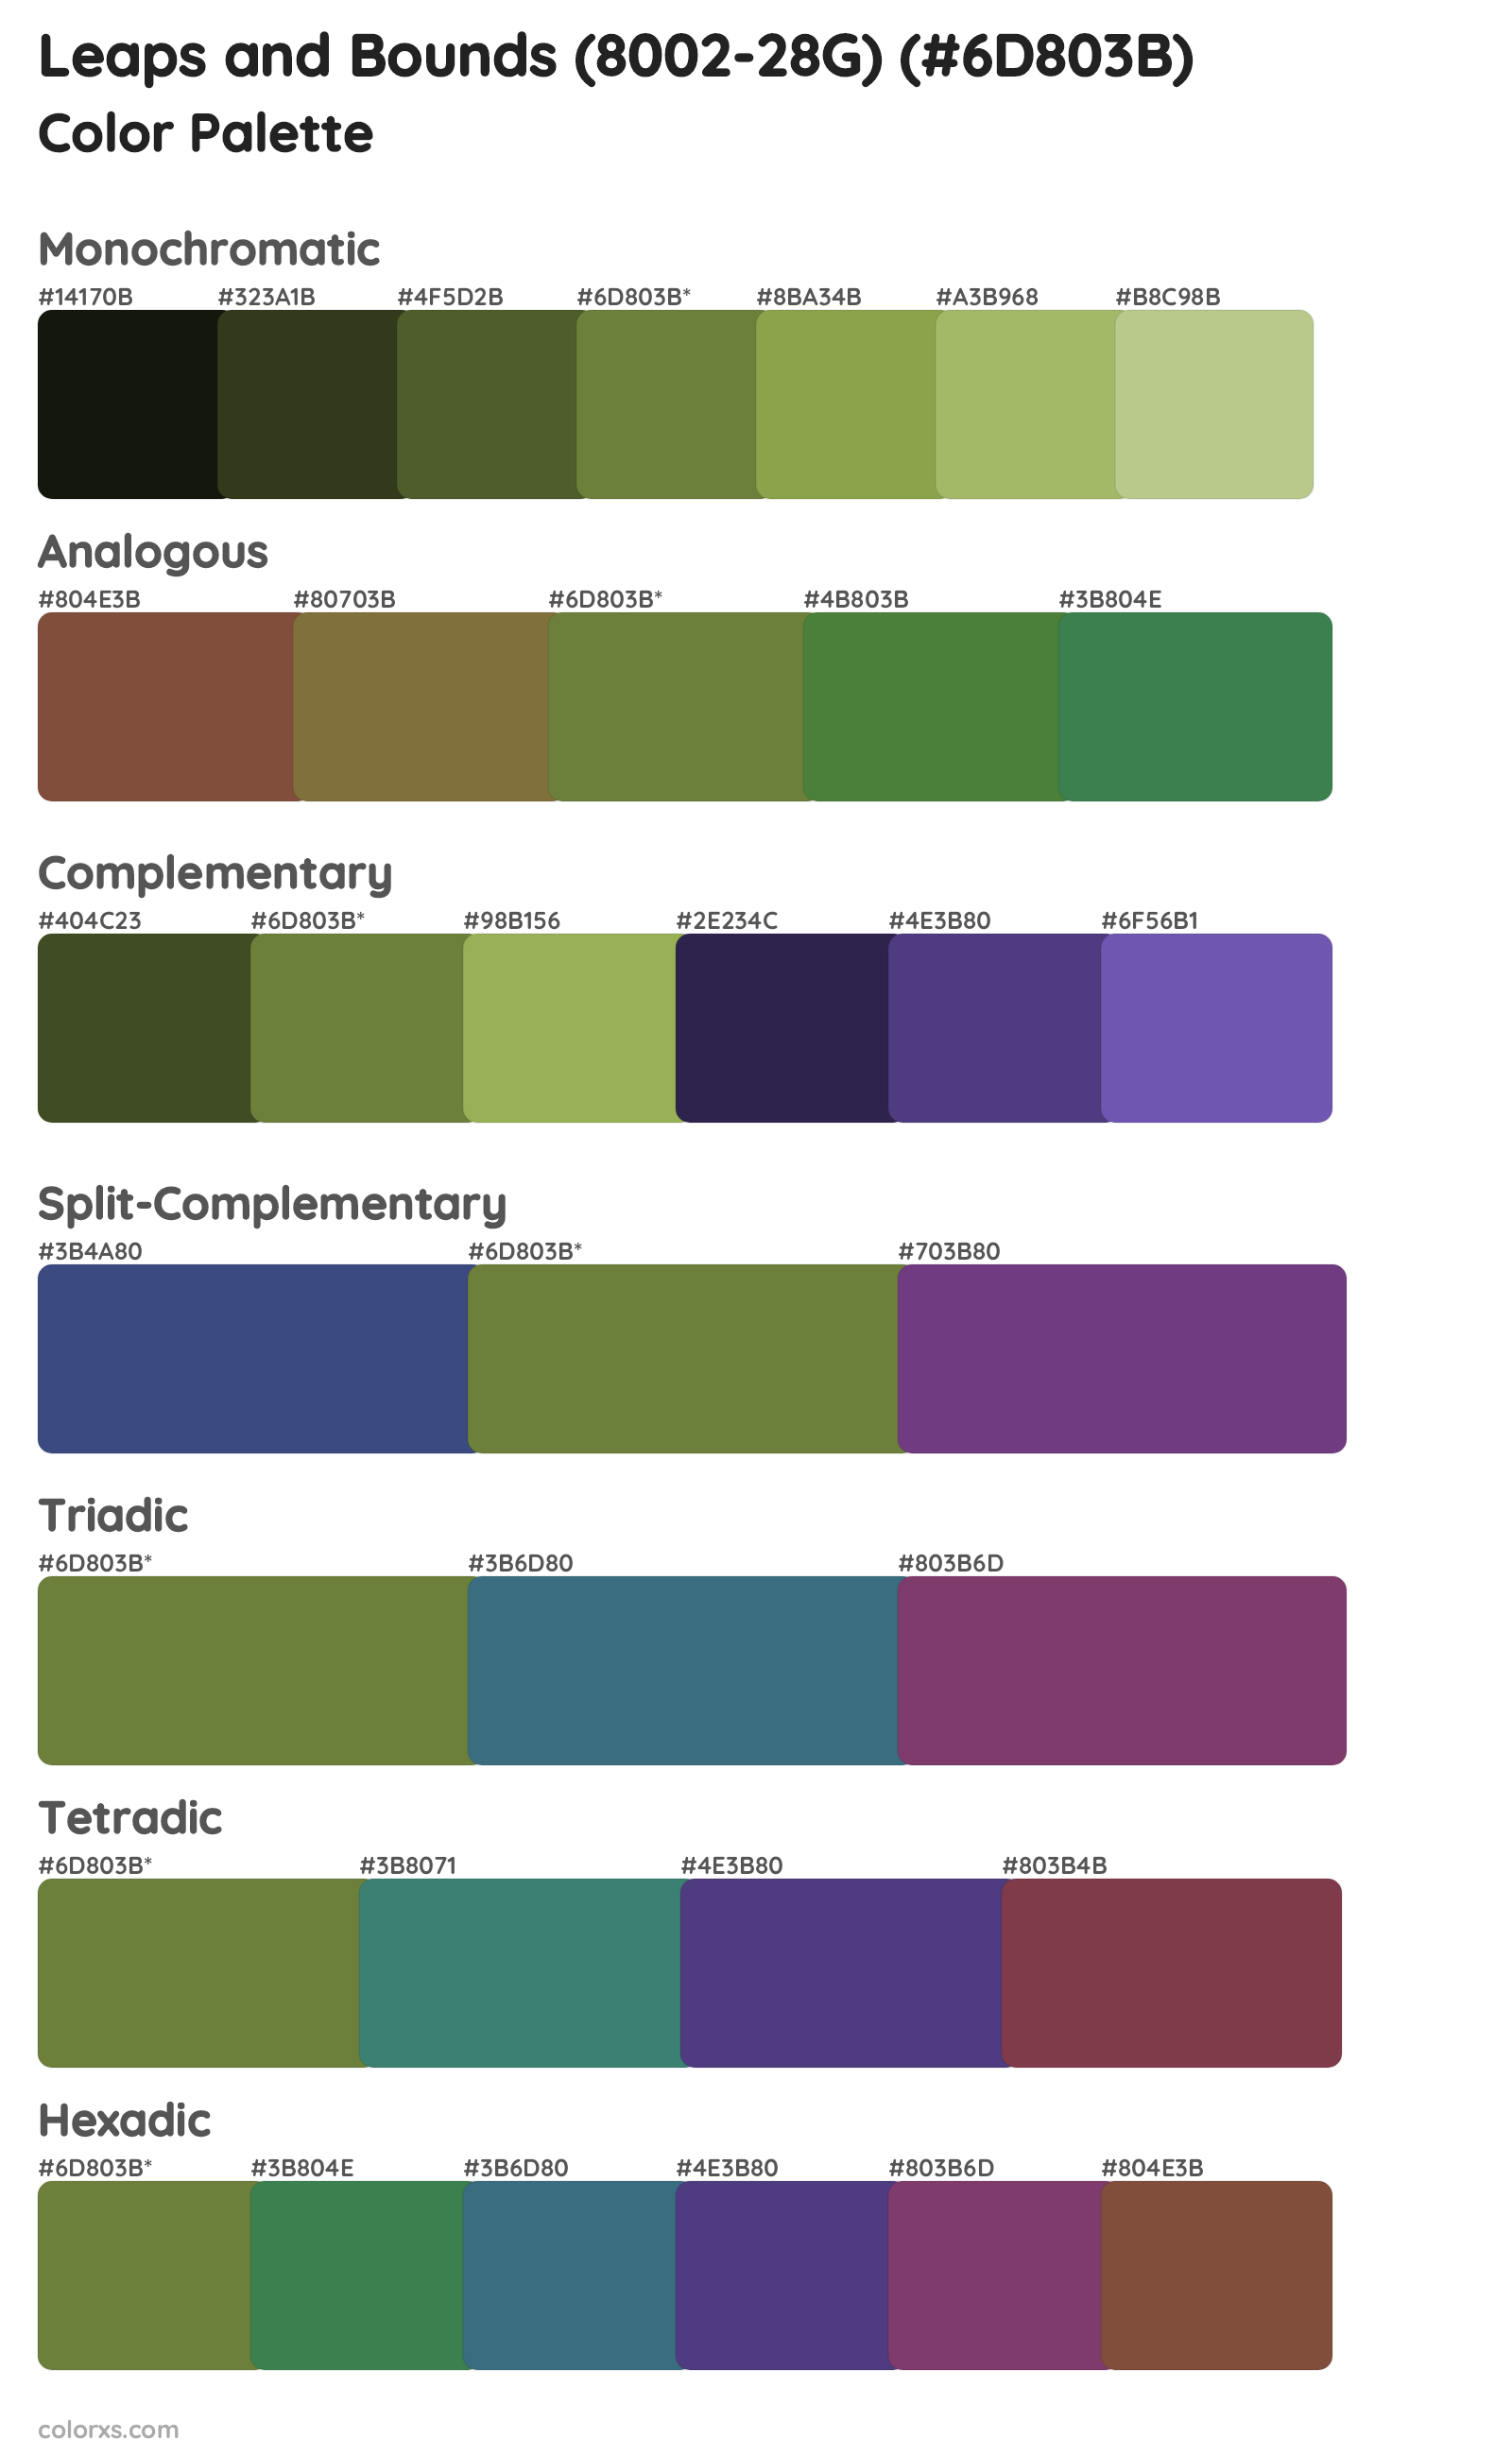 Leaps and Bounds (8002-28G) Color Scheme Palettes